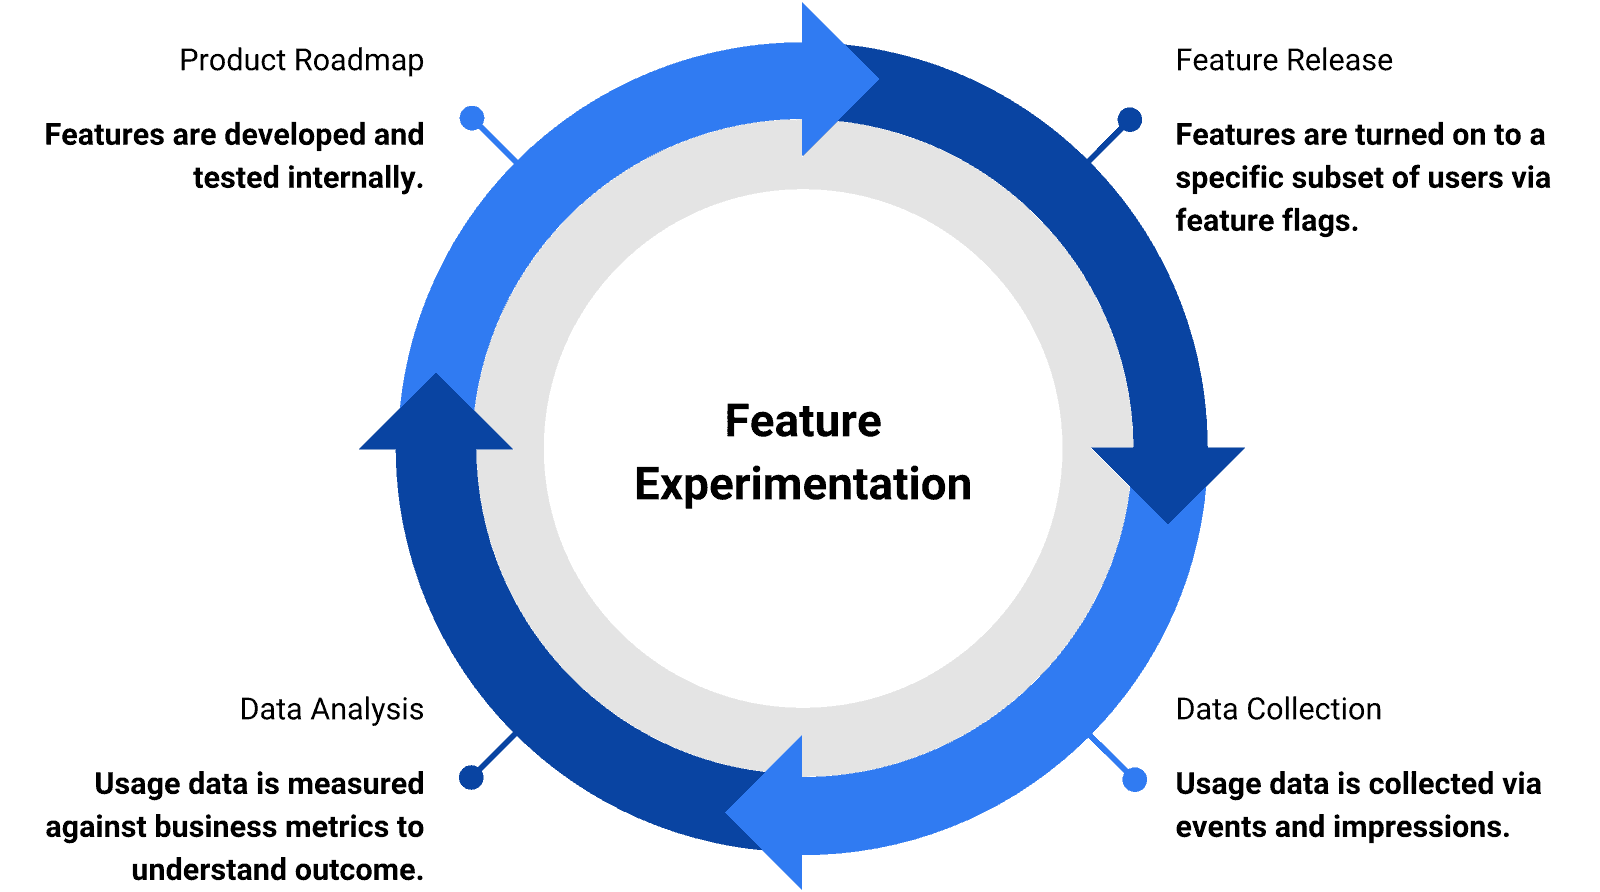 Feature experimentation closes the customer feedback loop